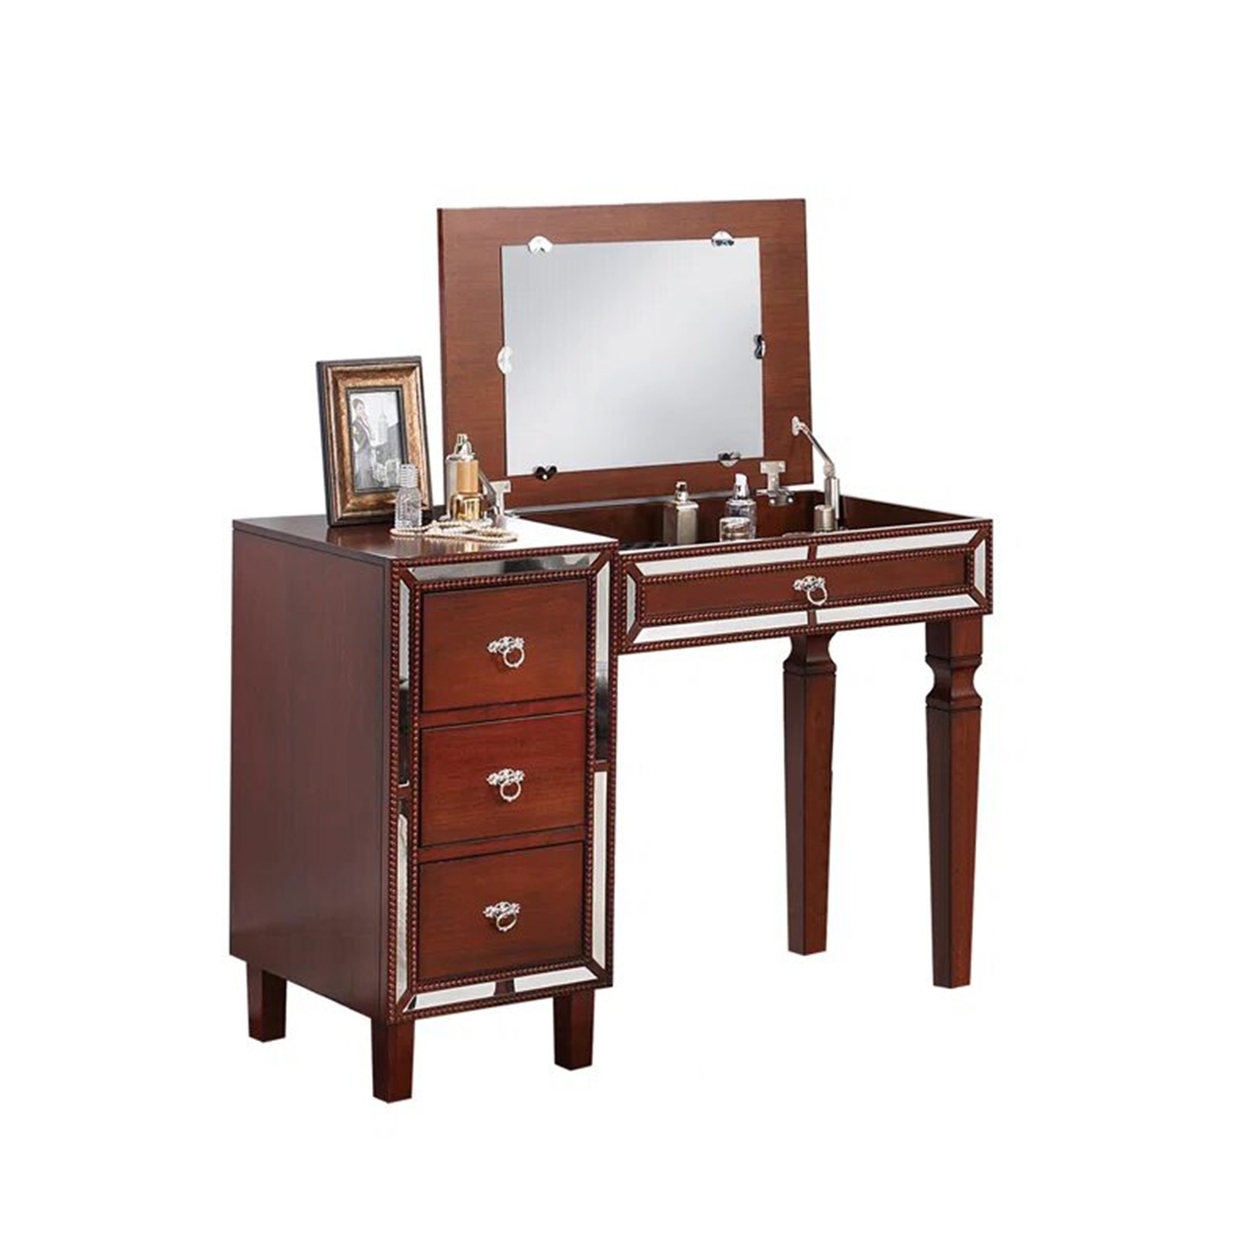 Sosi 47 Inch Vanity Desk Set With Stool, 3 Mirror Inlaid Drawers, Brown